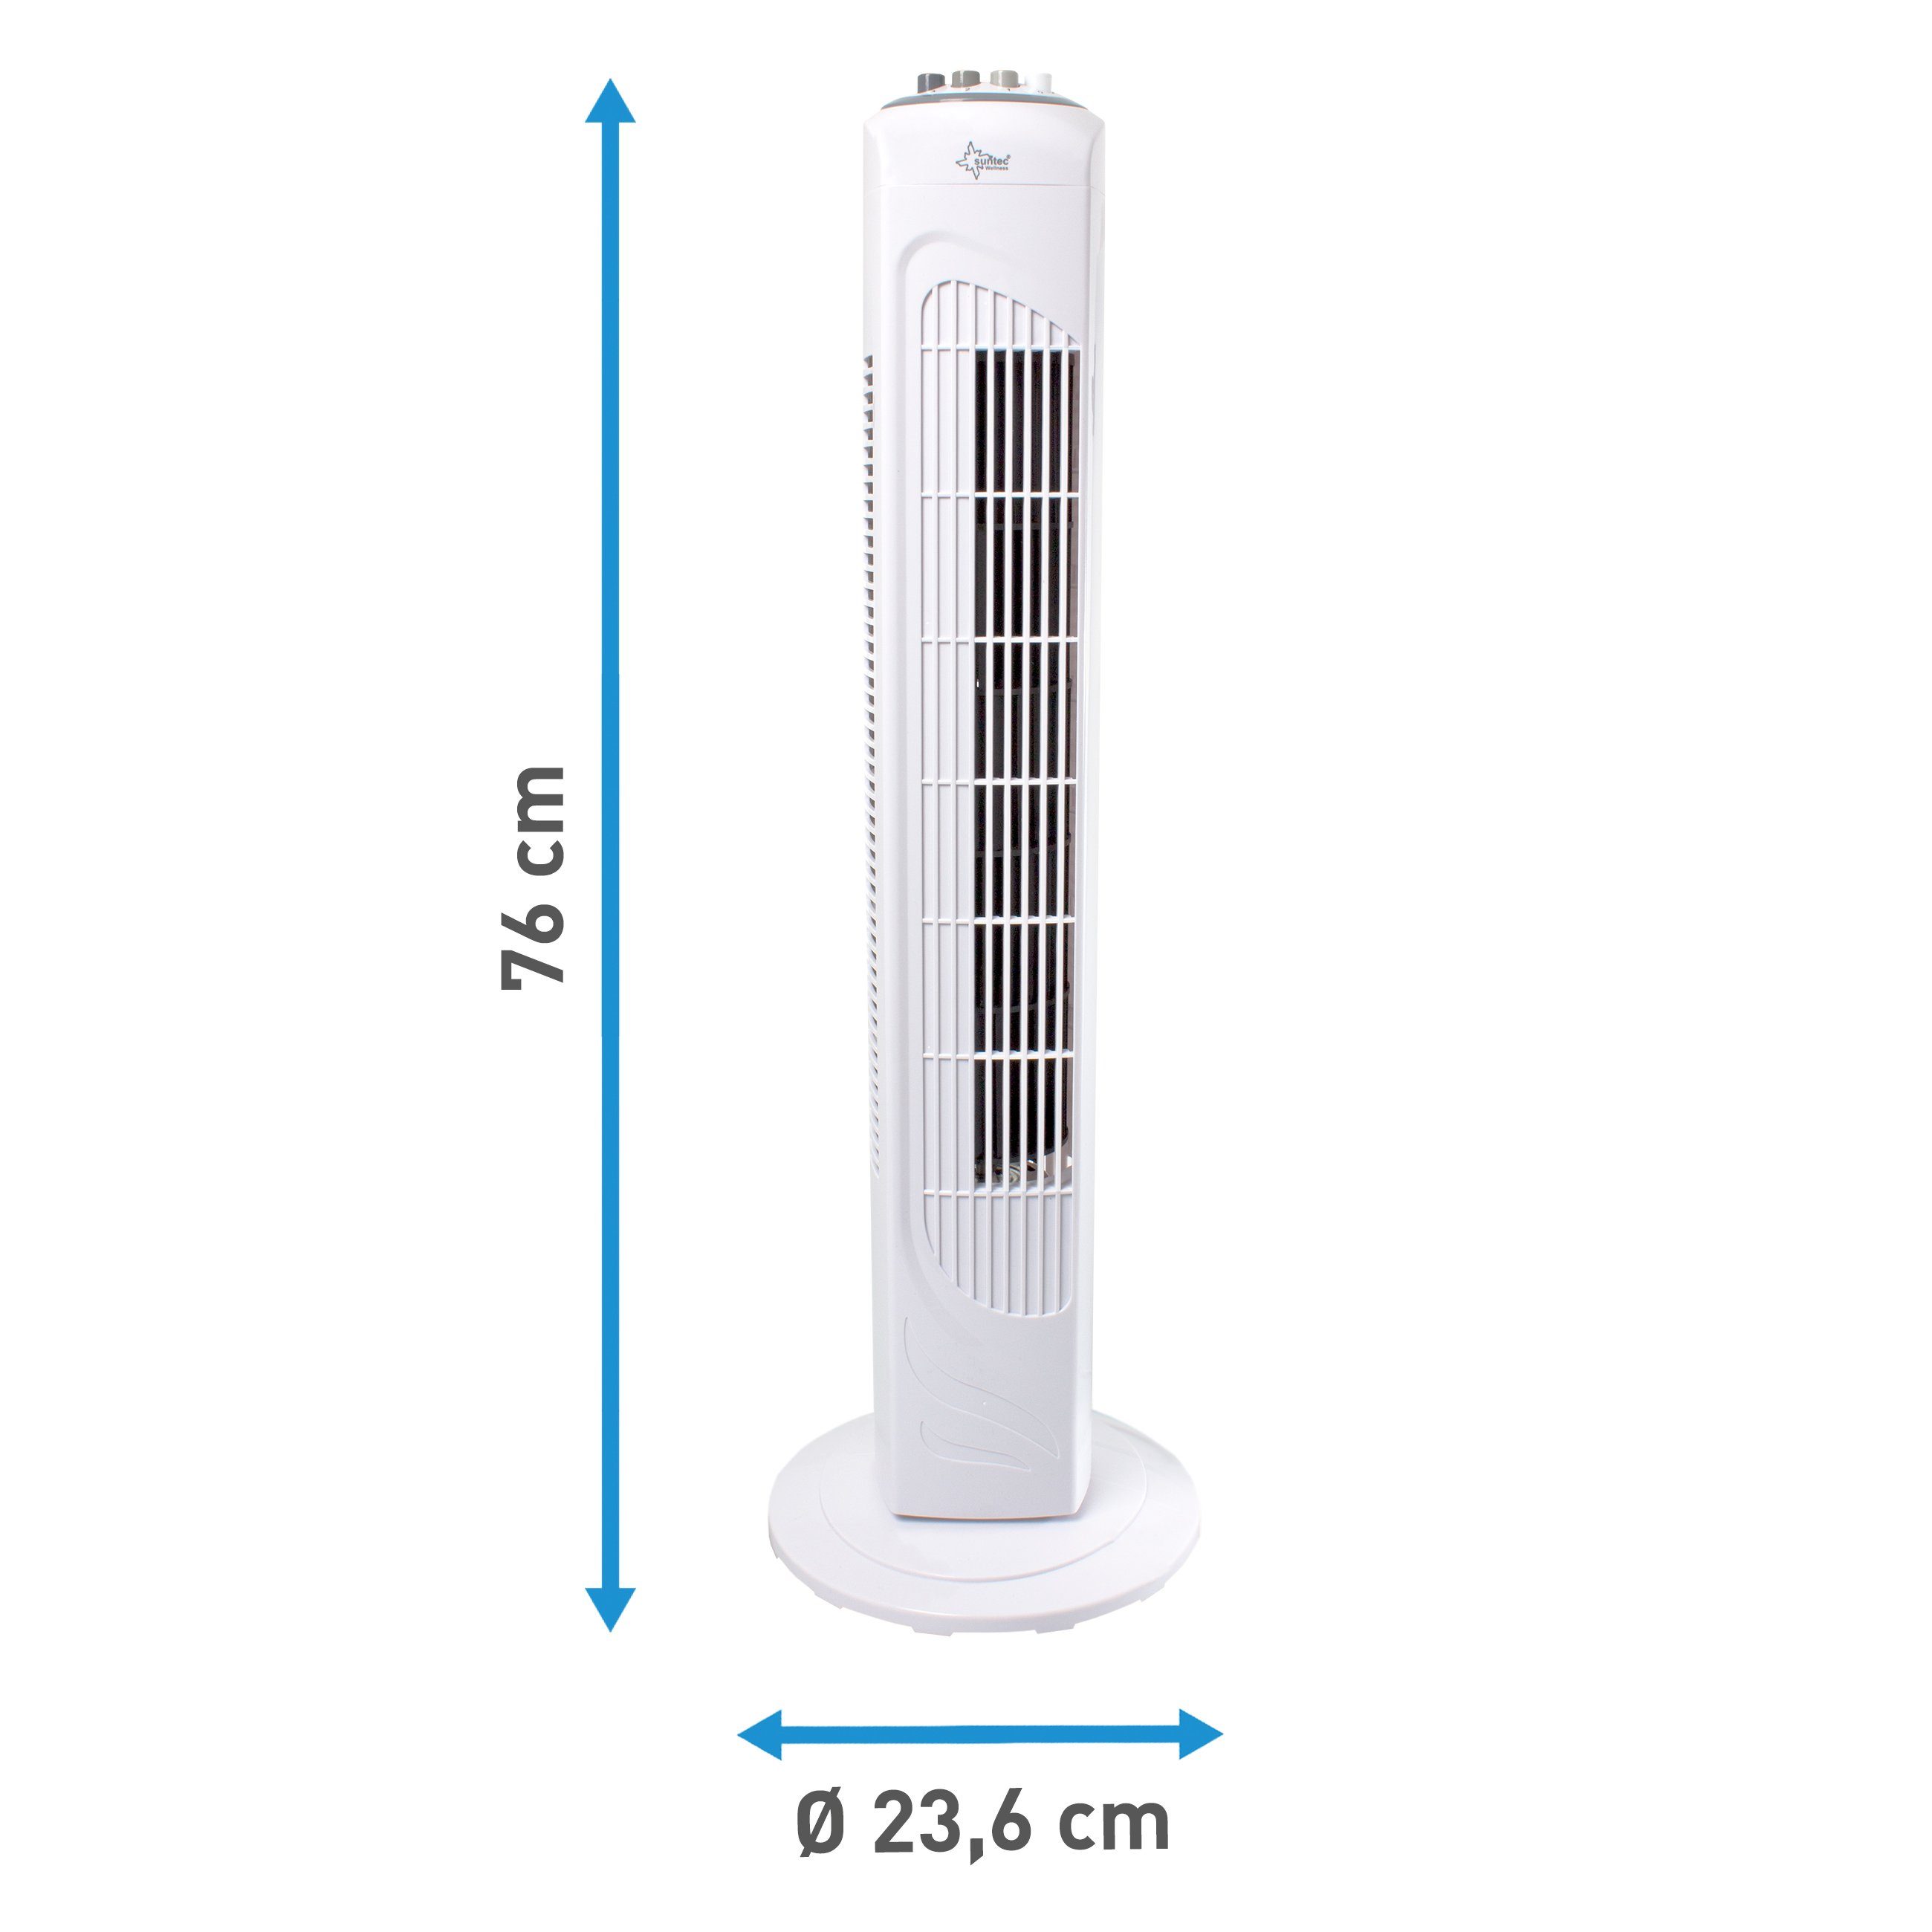 Suntec Turmventilator Ventilator Soft-Touch-Bedienung, Fan, TV, Watt inkl. Fernbedienung, 45 CoolBreeze 7400 Wellness